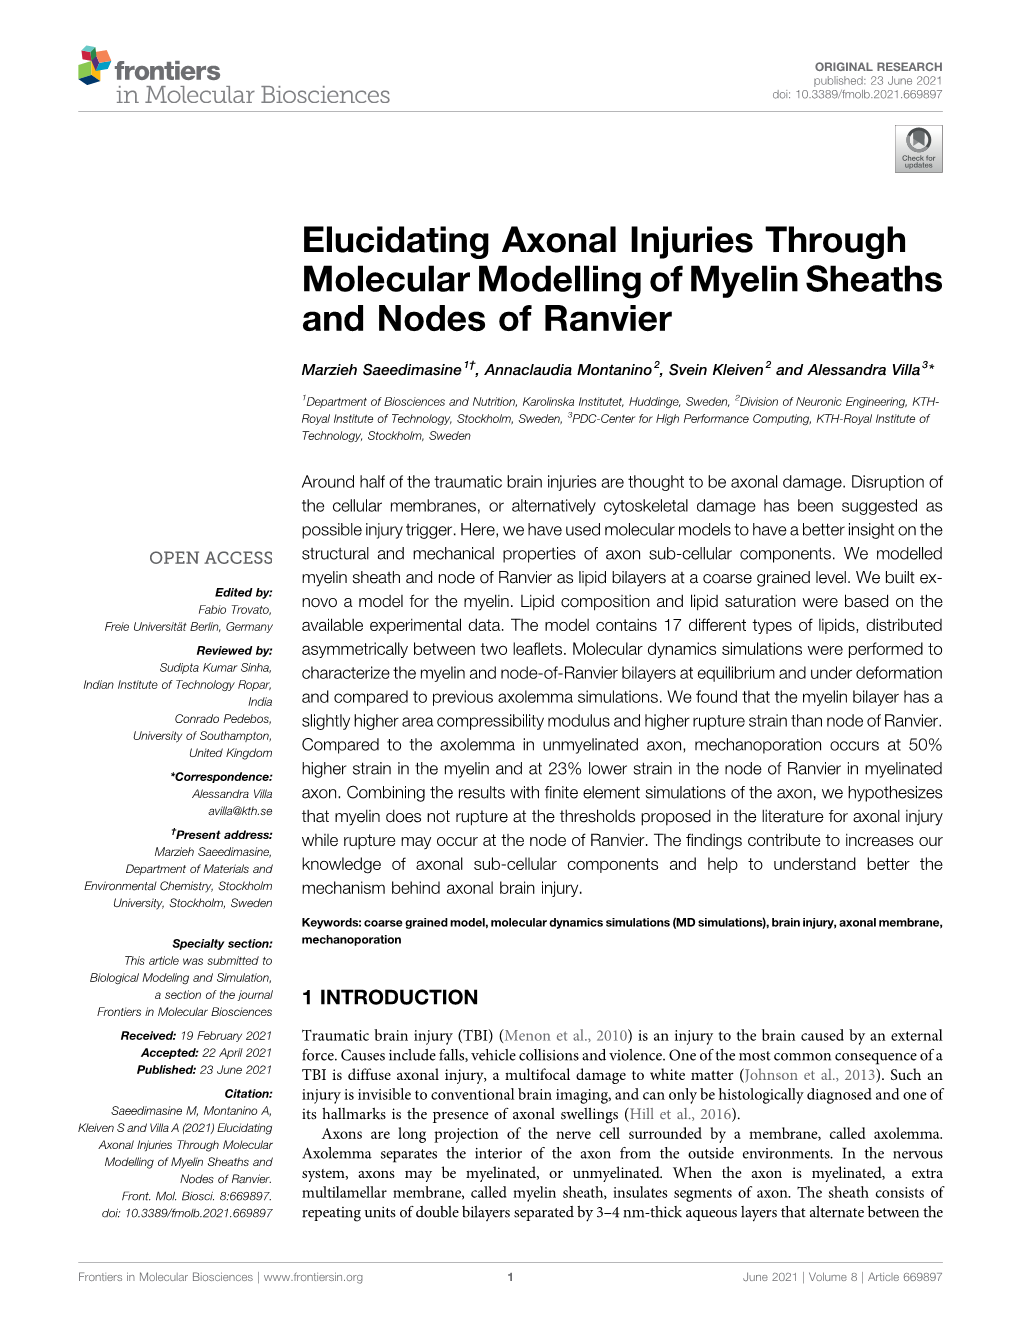 Elucidating Axonal Injuries Through Molecular Modelling of Myelin Sheaths and Nodes of Ranvier